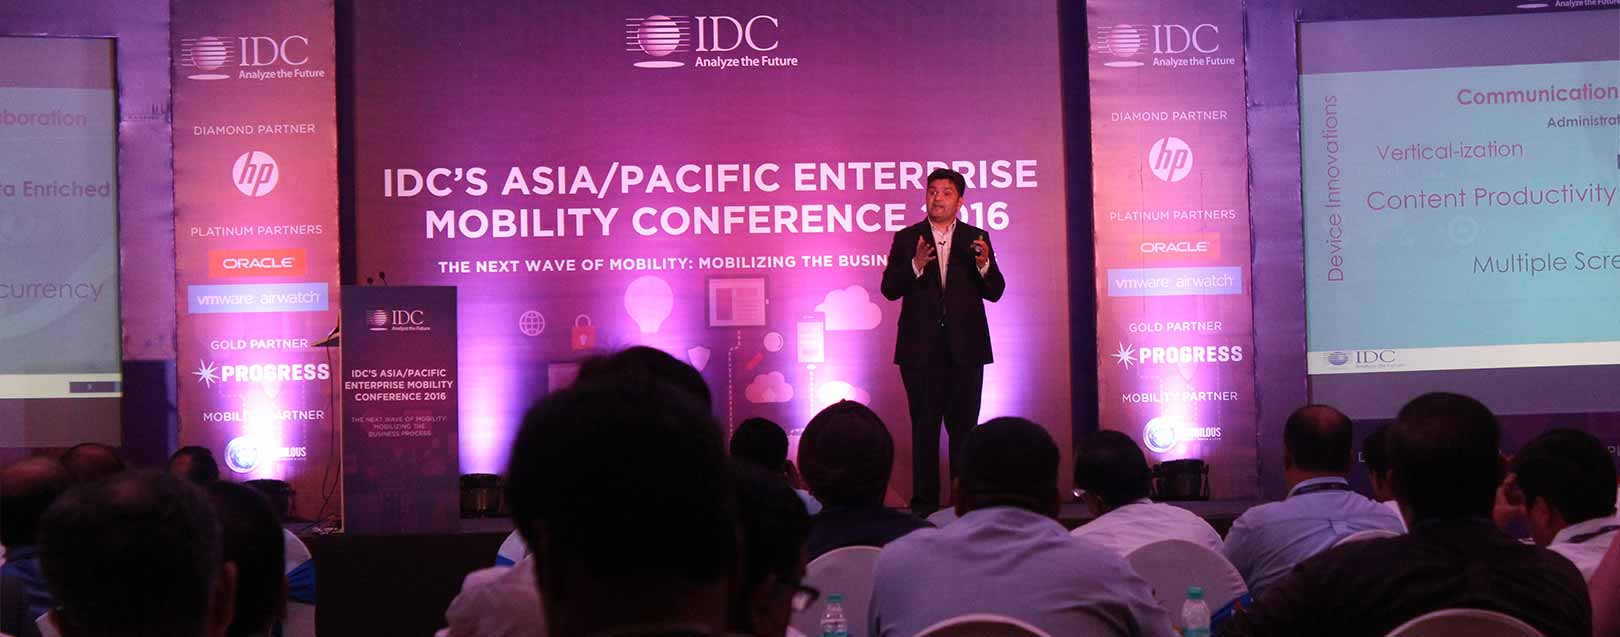 Enterprise mobility driving innovation: IDC